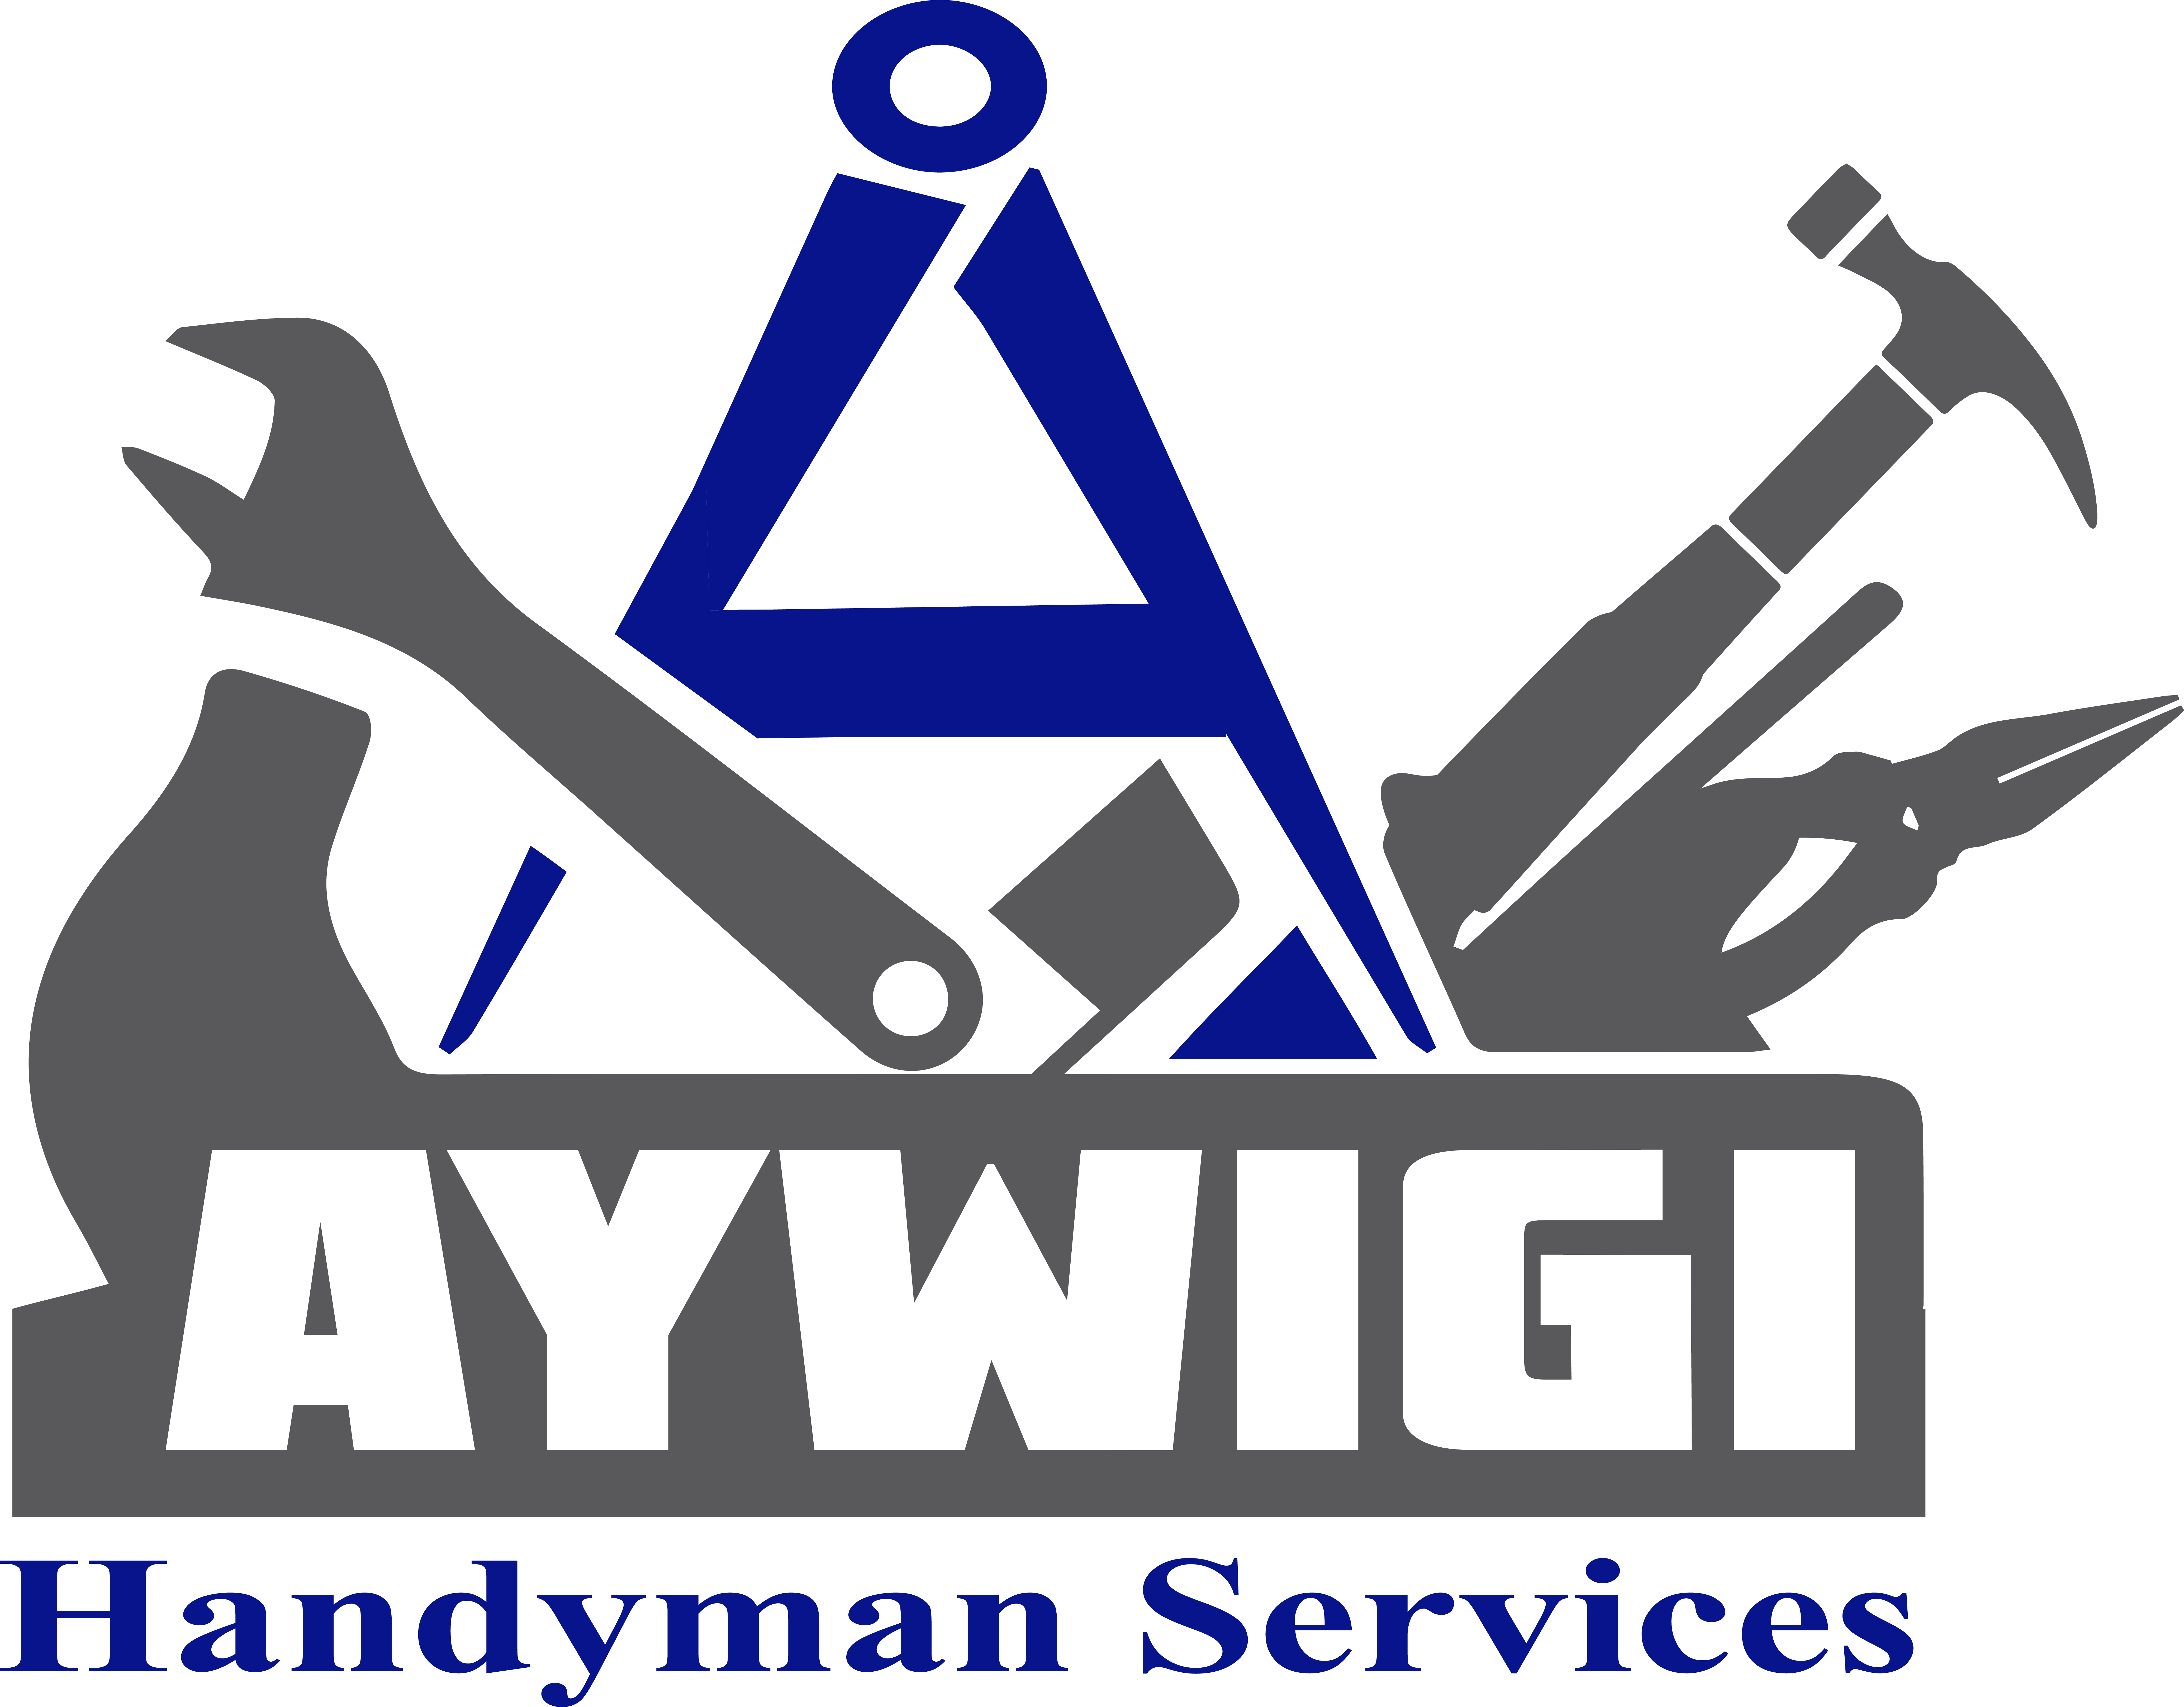 Aywigi Handyman Services! Let us fix it!